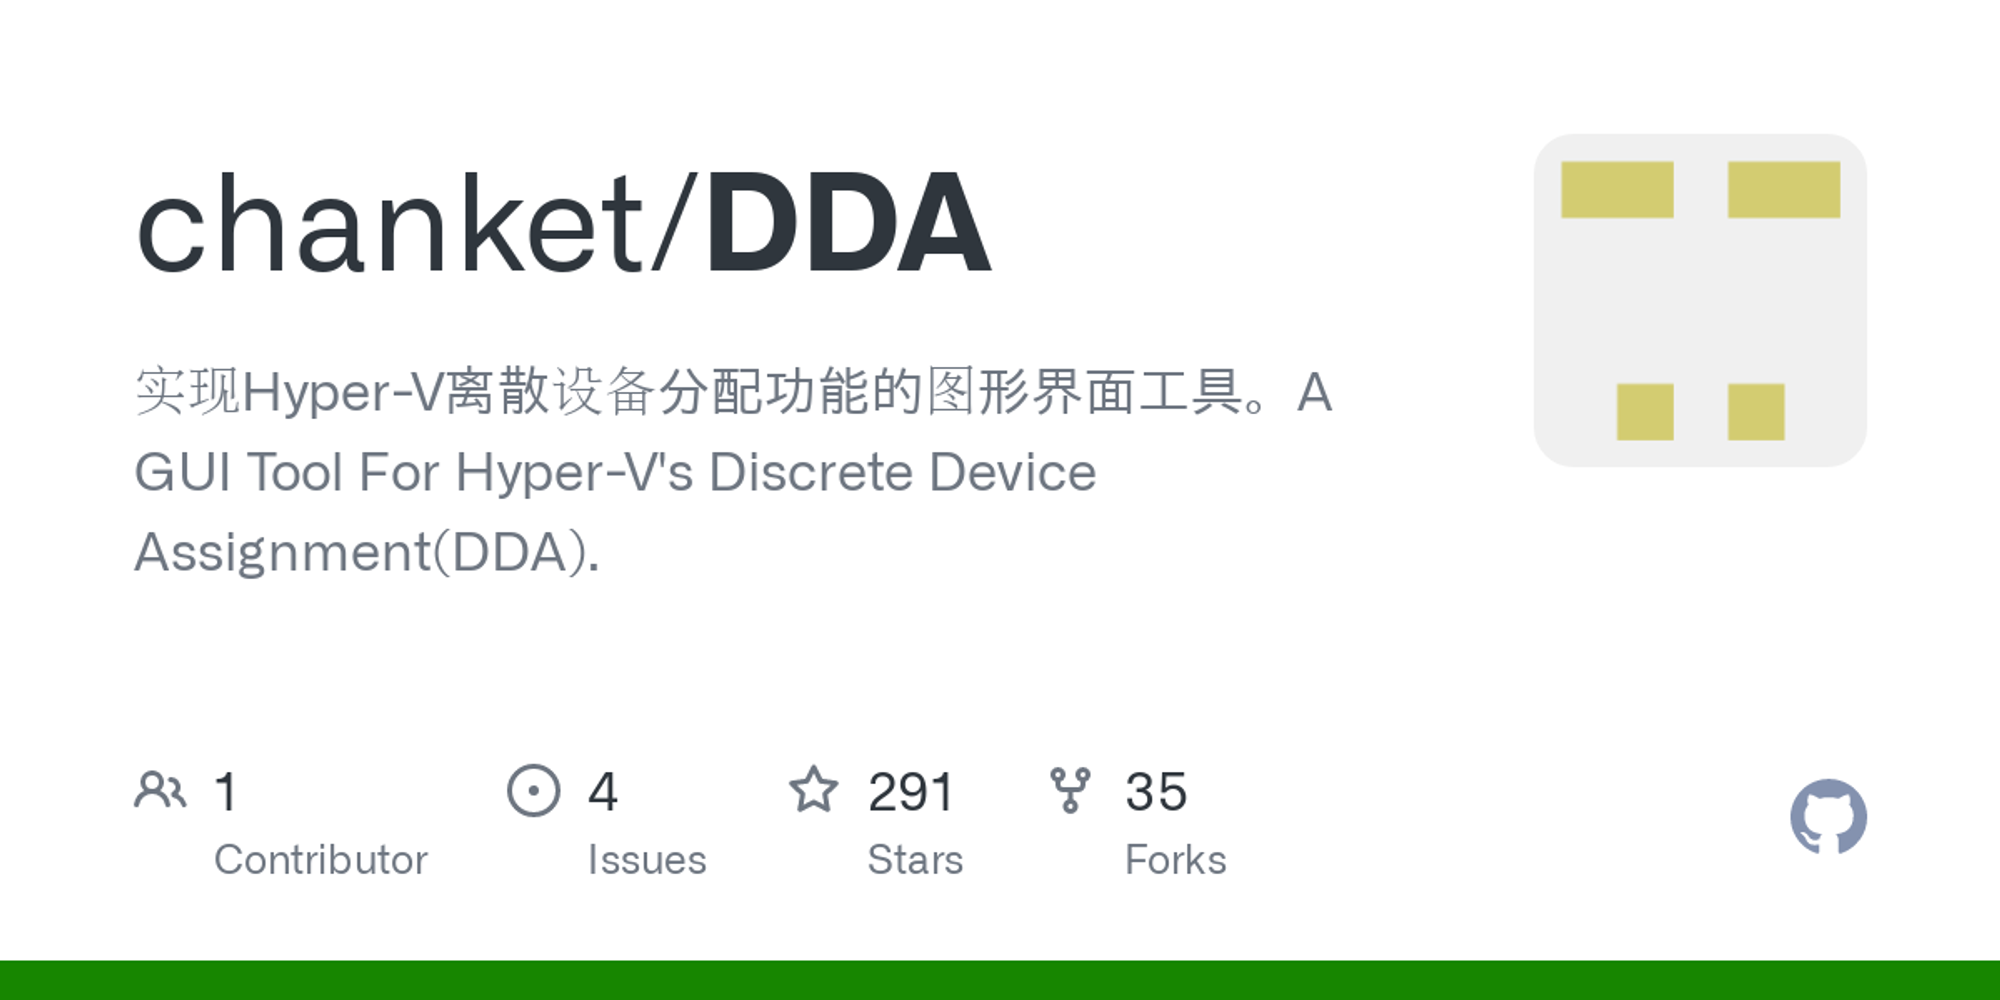 GitHub - chanket/DDA: 实现Hyper-V离散设备分配功能的图形界面工具。A GUI Tool For Hyper-V's Discrete Device Assignment(DDA).